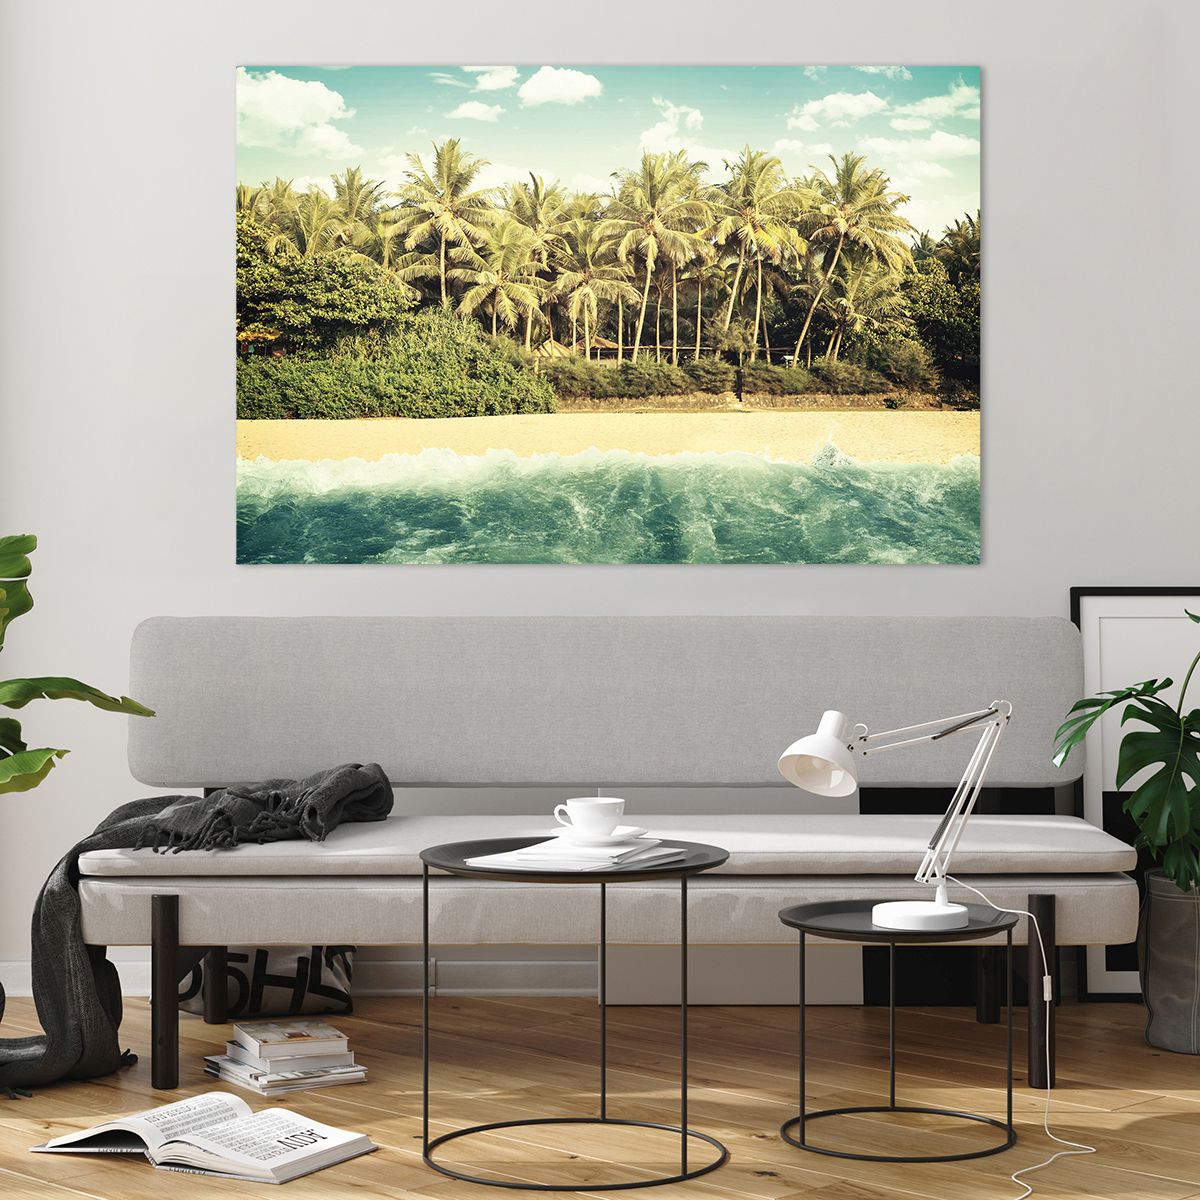 Glass picture  Landscape, Glass picture  Beach, Glass picture  Coconut Palm, Glass picture  Sea, Glass picture  Nature